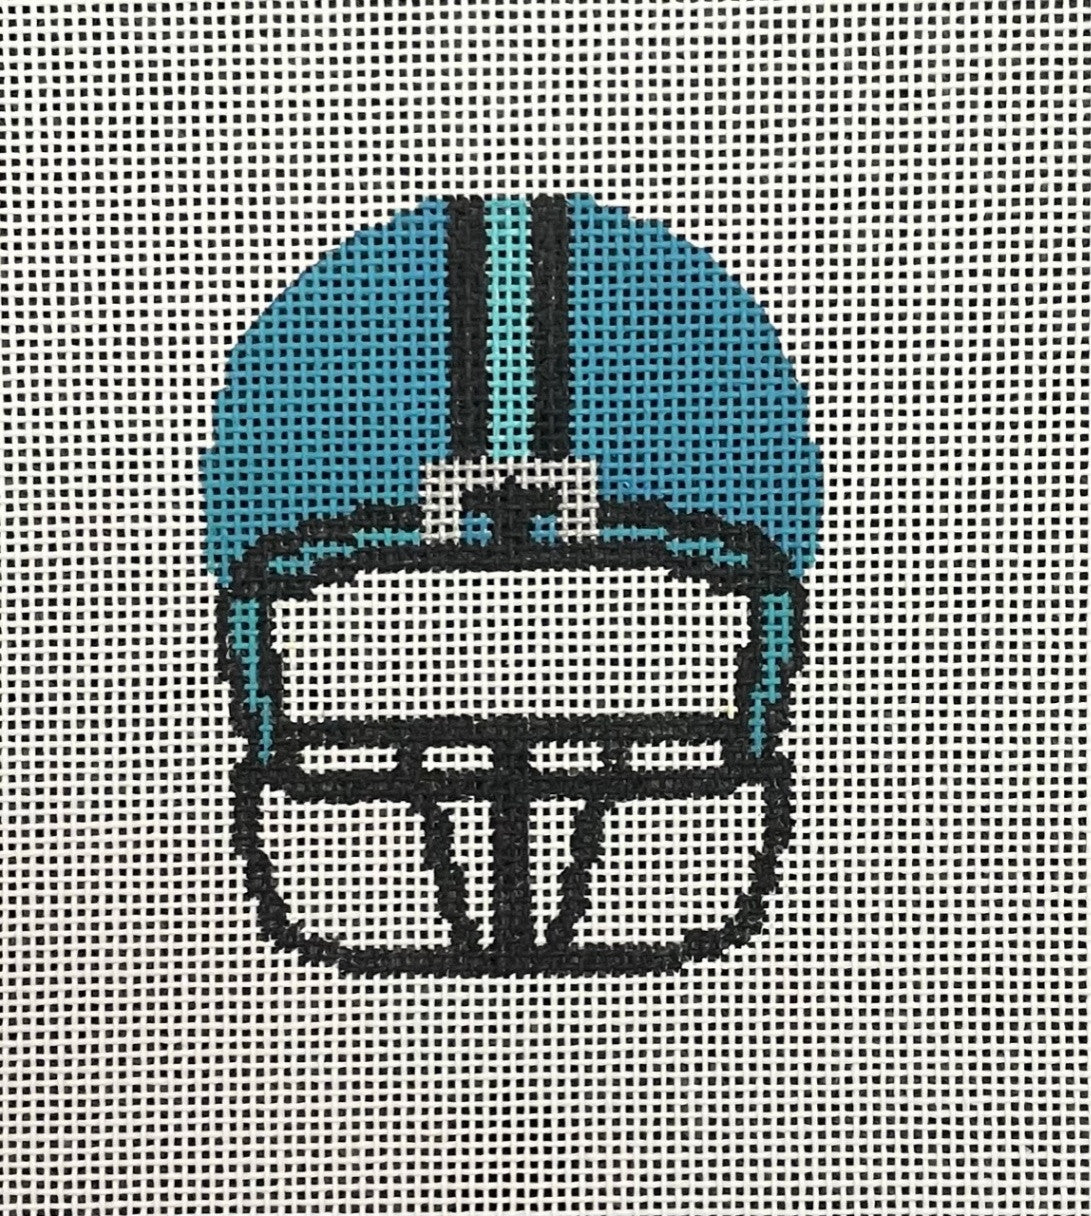 Amanda Lawford AL-090 Football Helmet